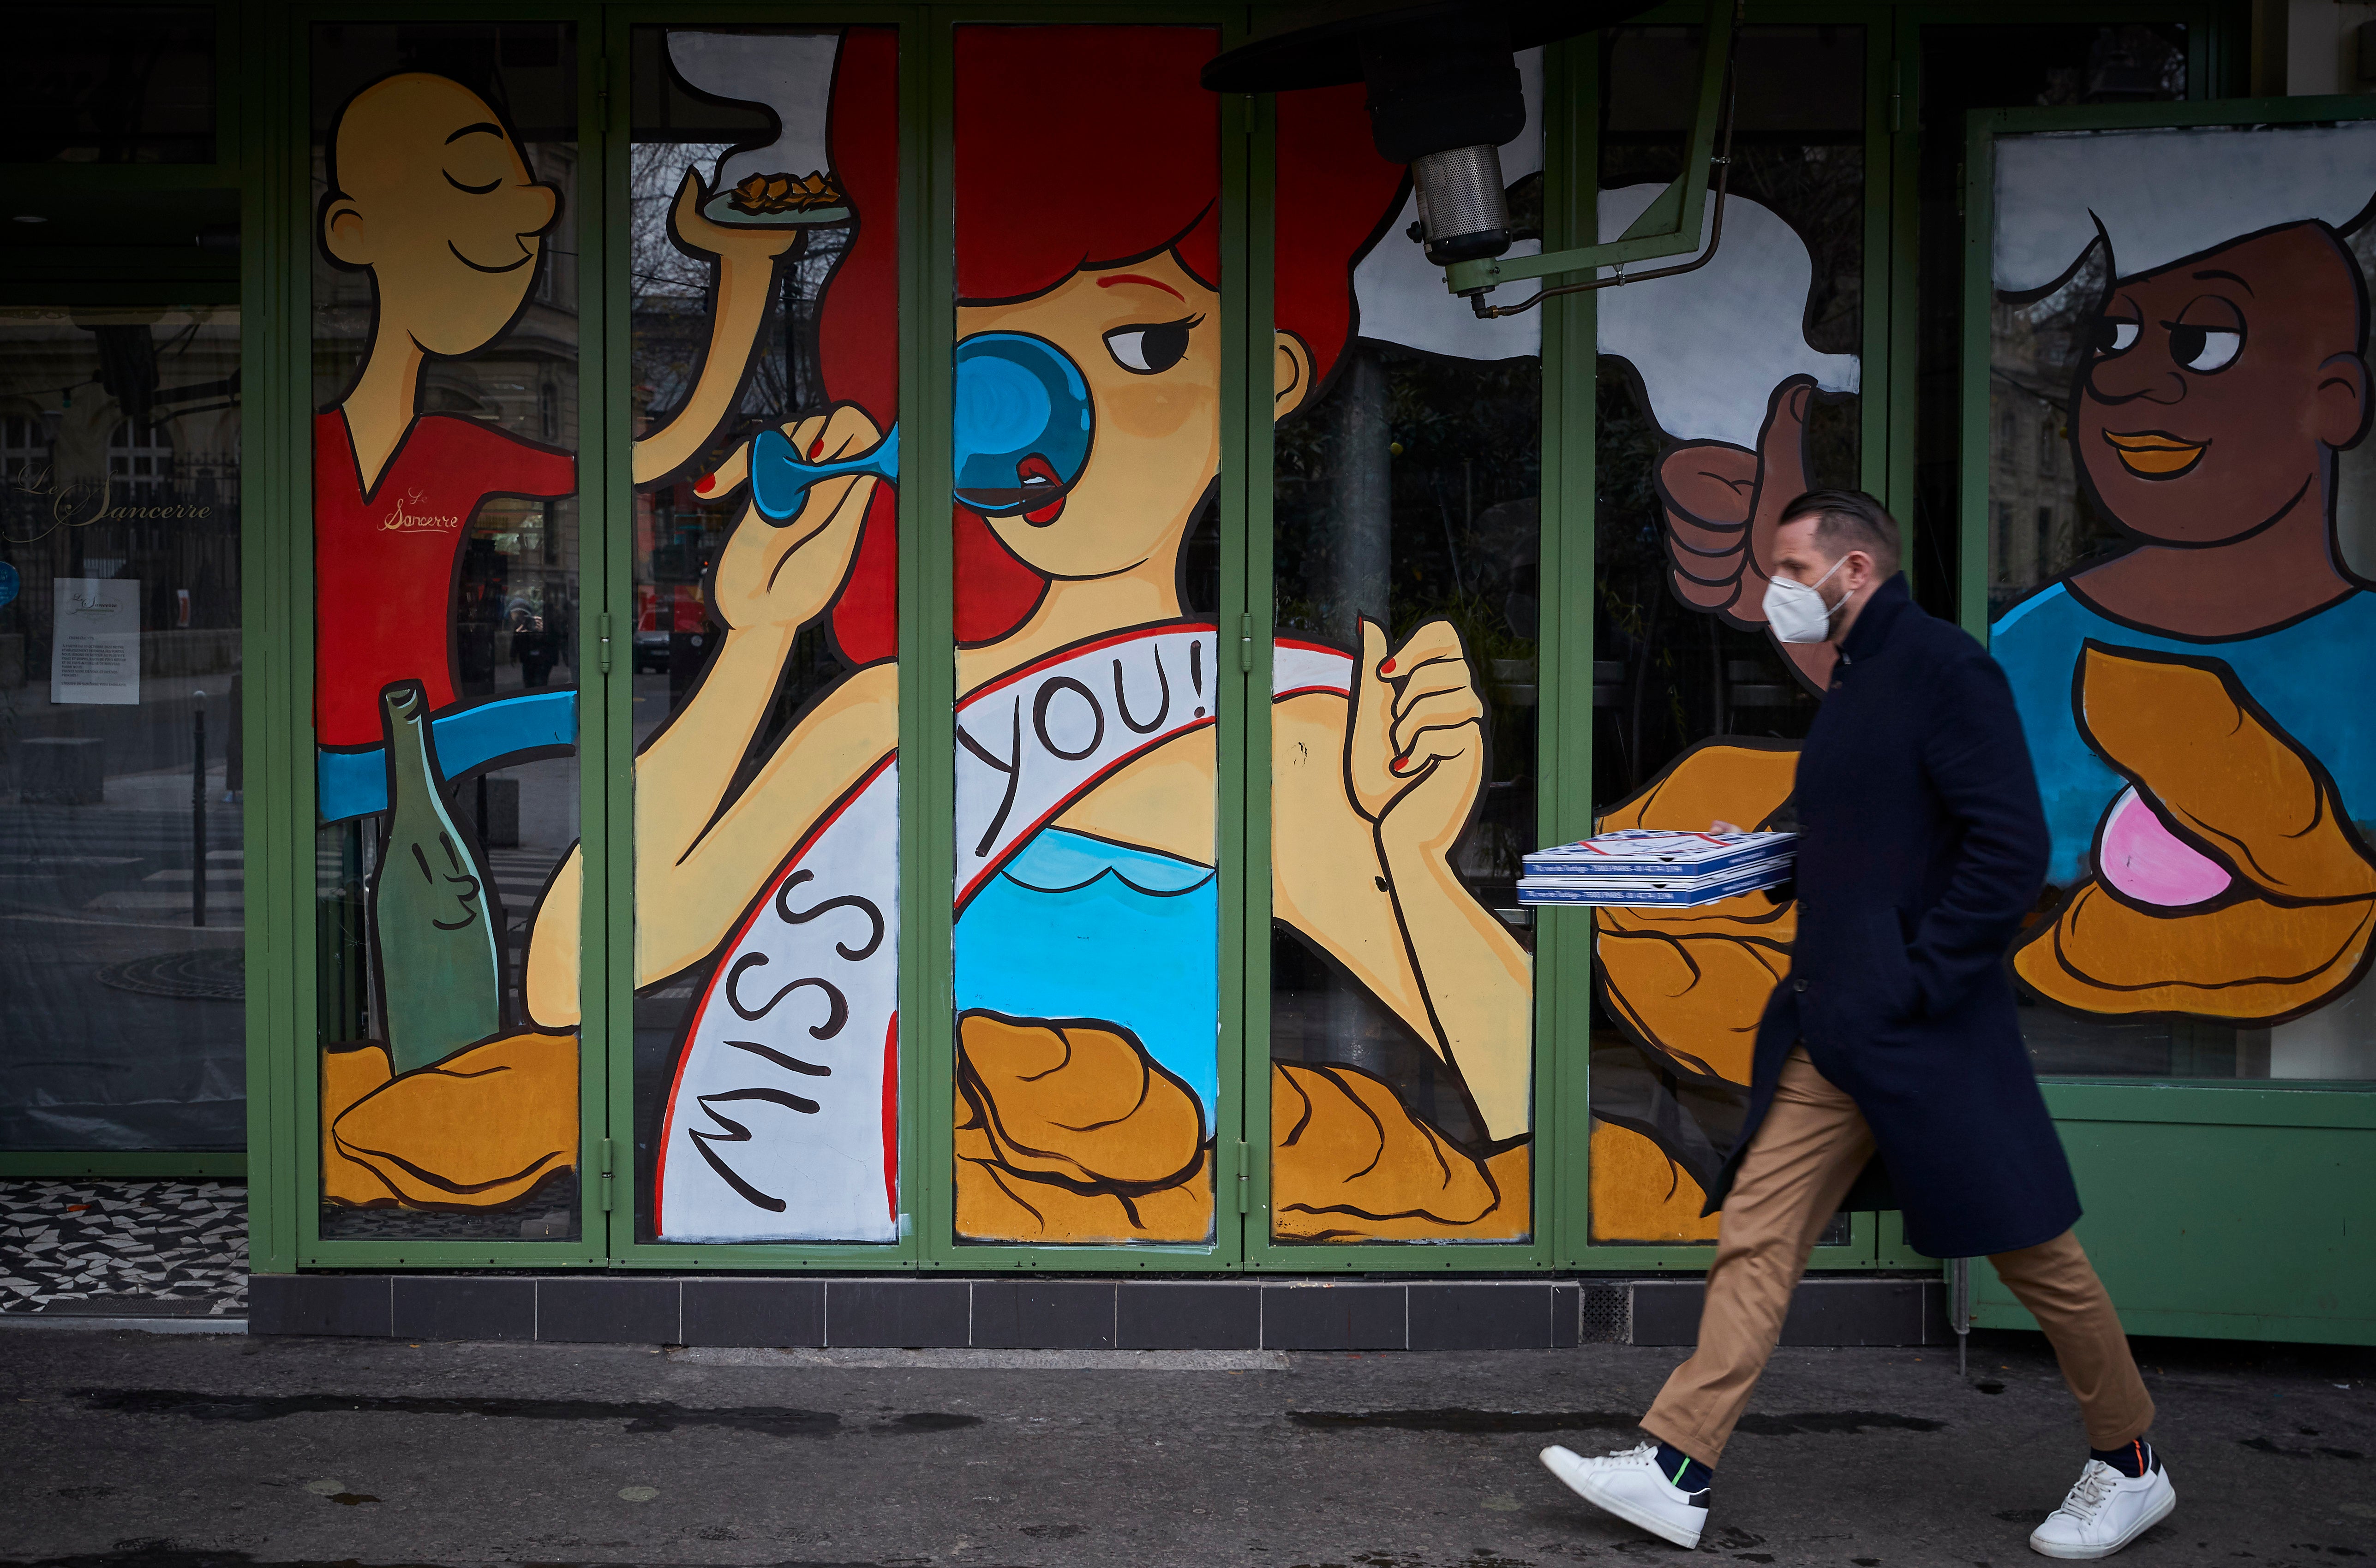 Taken away: Paris restaurants have lost their raison d'etre